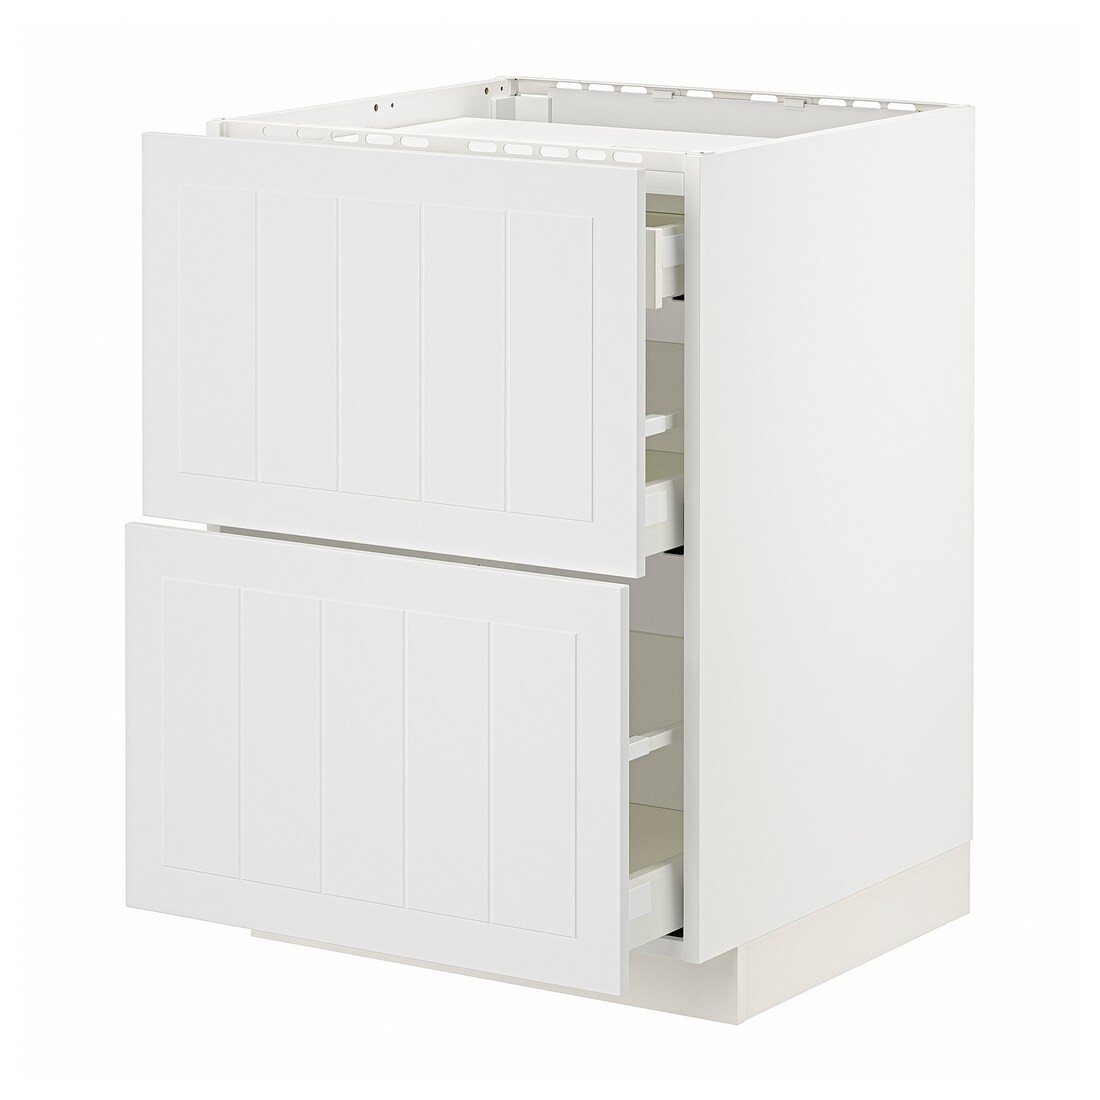 METOD МЕТОД / MAXIMERA МАКСИМЕРА Шкаф для варочной панели / 3 ящика, белый / Stensund белый, 60x60 см